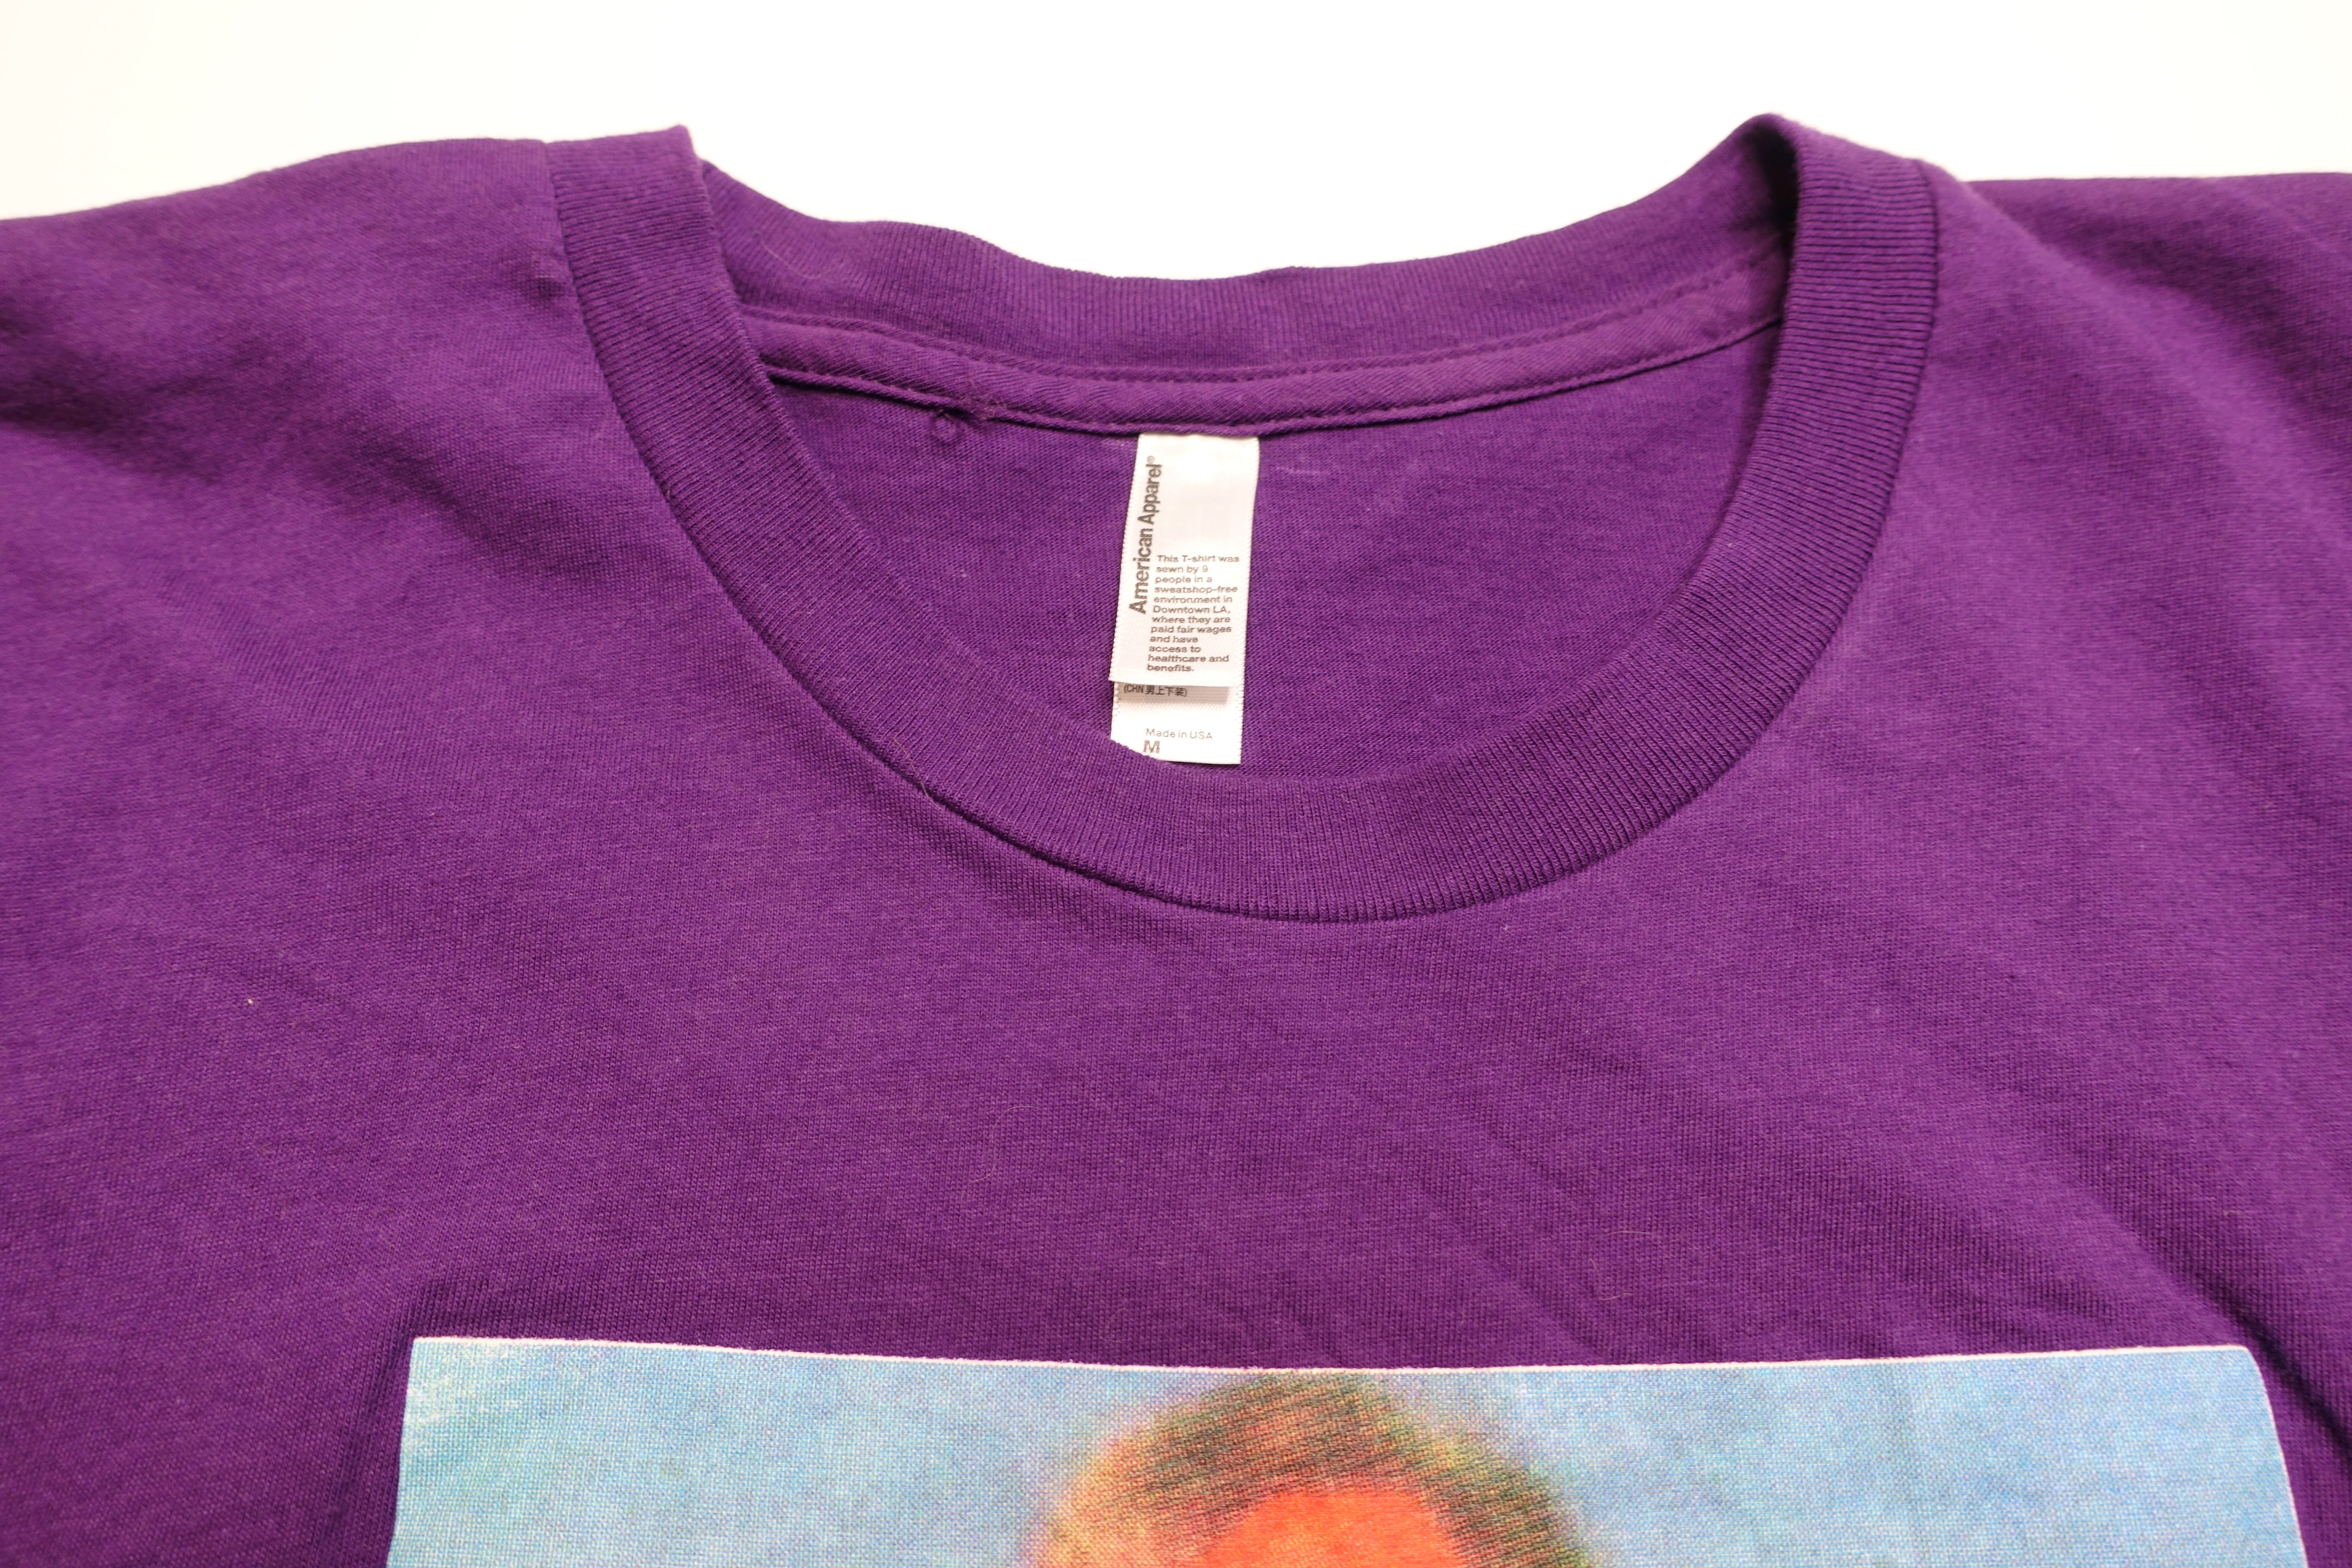 Bill Callahan - Dream River 2013 Purple Tour Shirt Size Medium